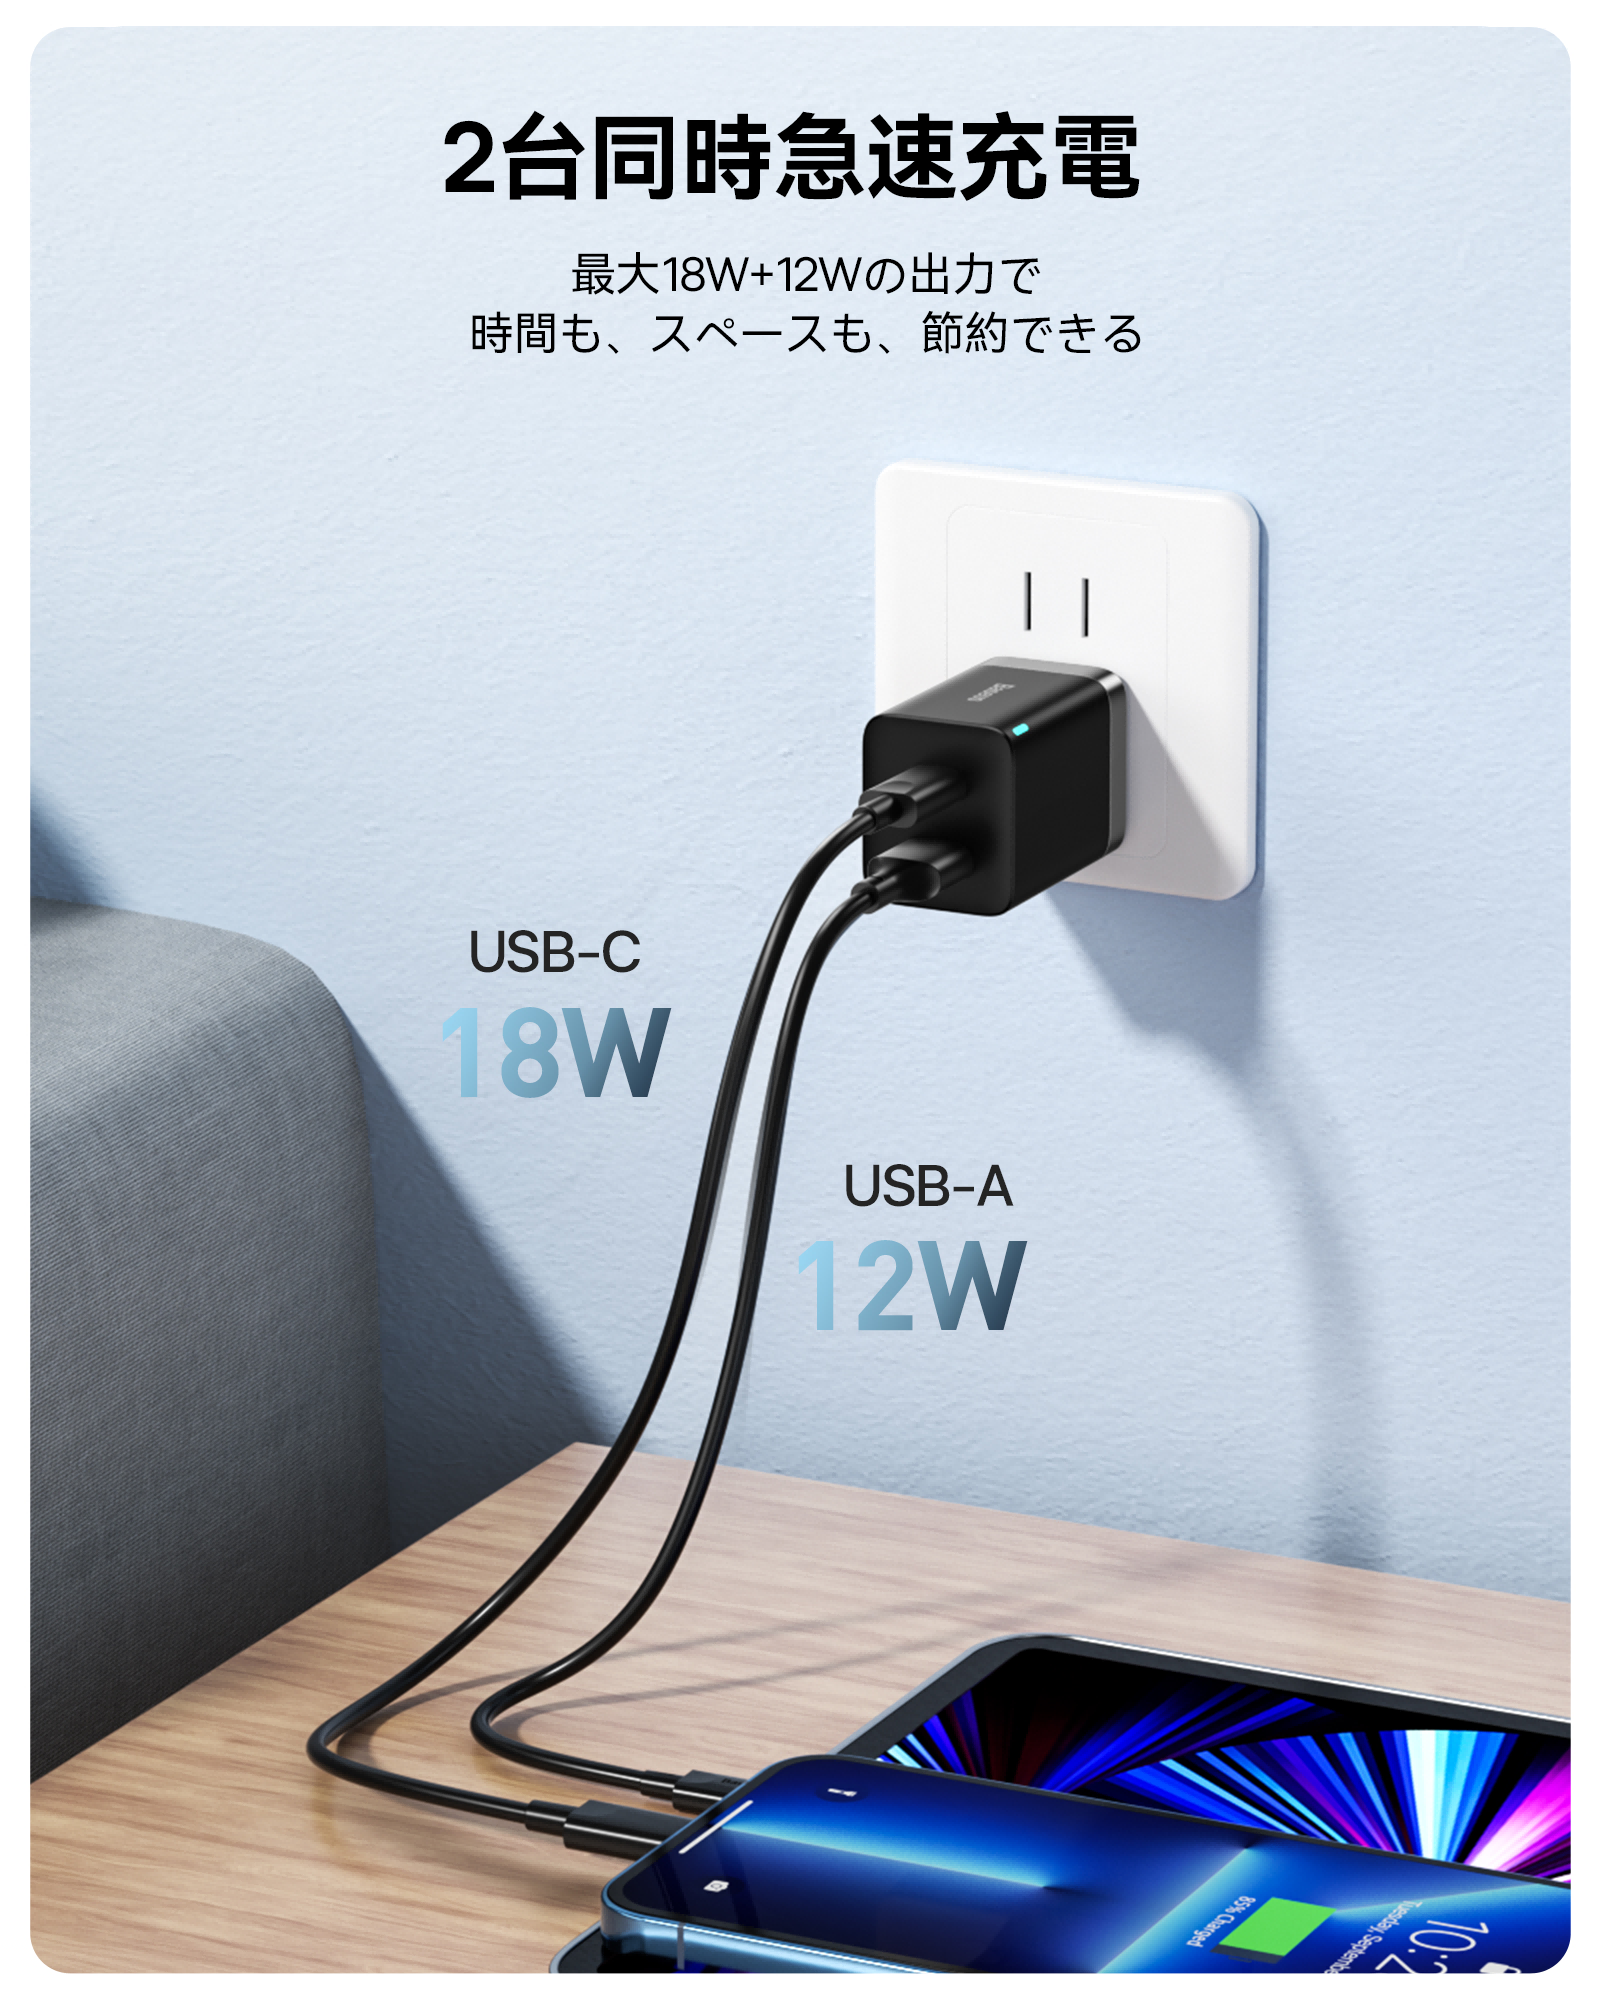 Baseus PD 充電器 30W USB充電器 2ポート (USB-C & USB-A) 【Super Si (スーパーシリコン) 採用